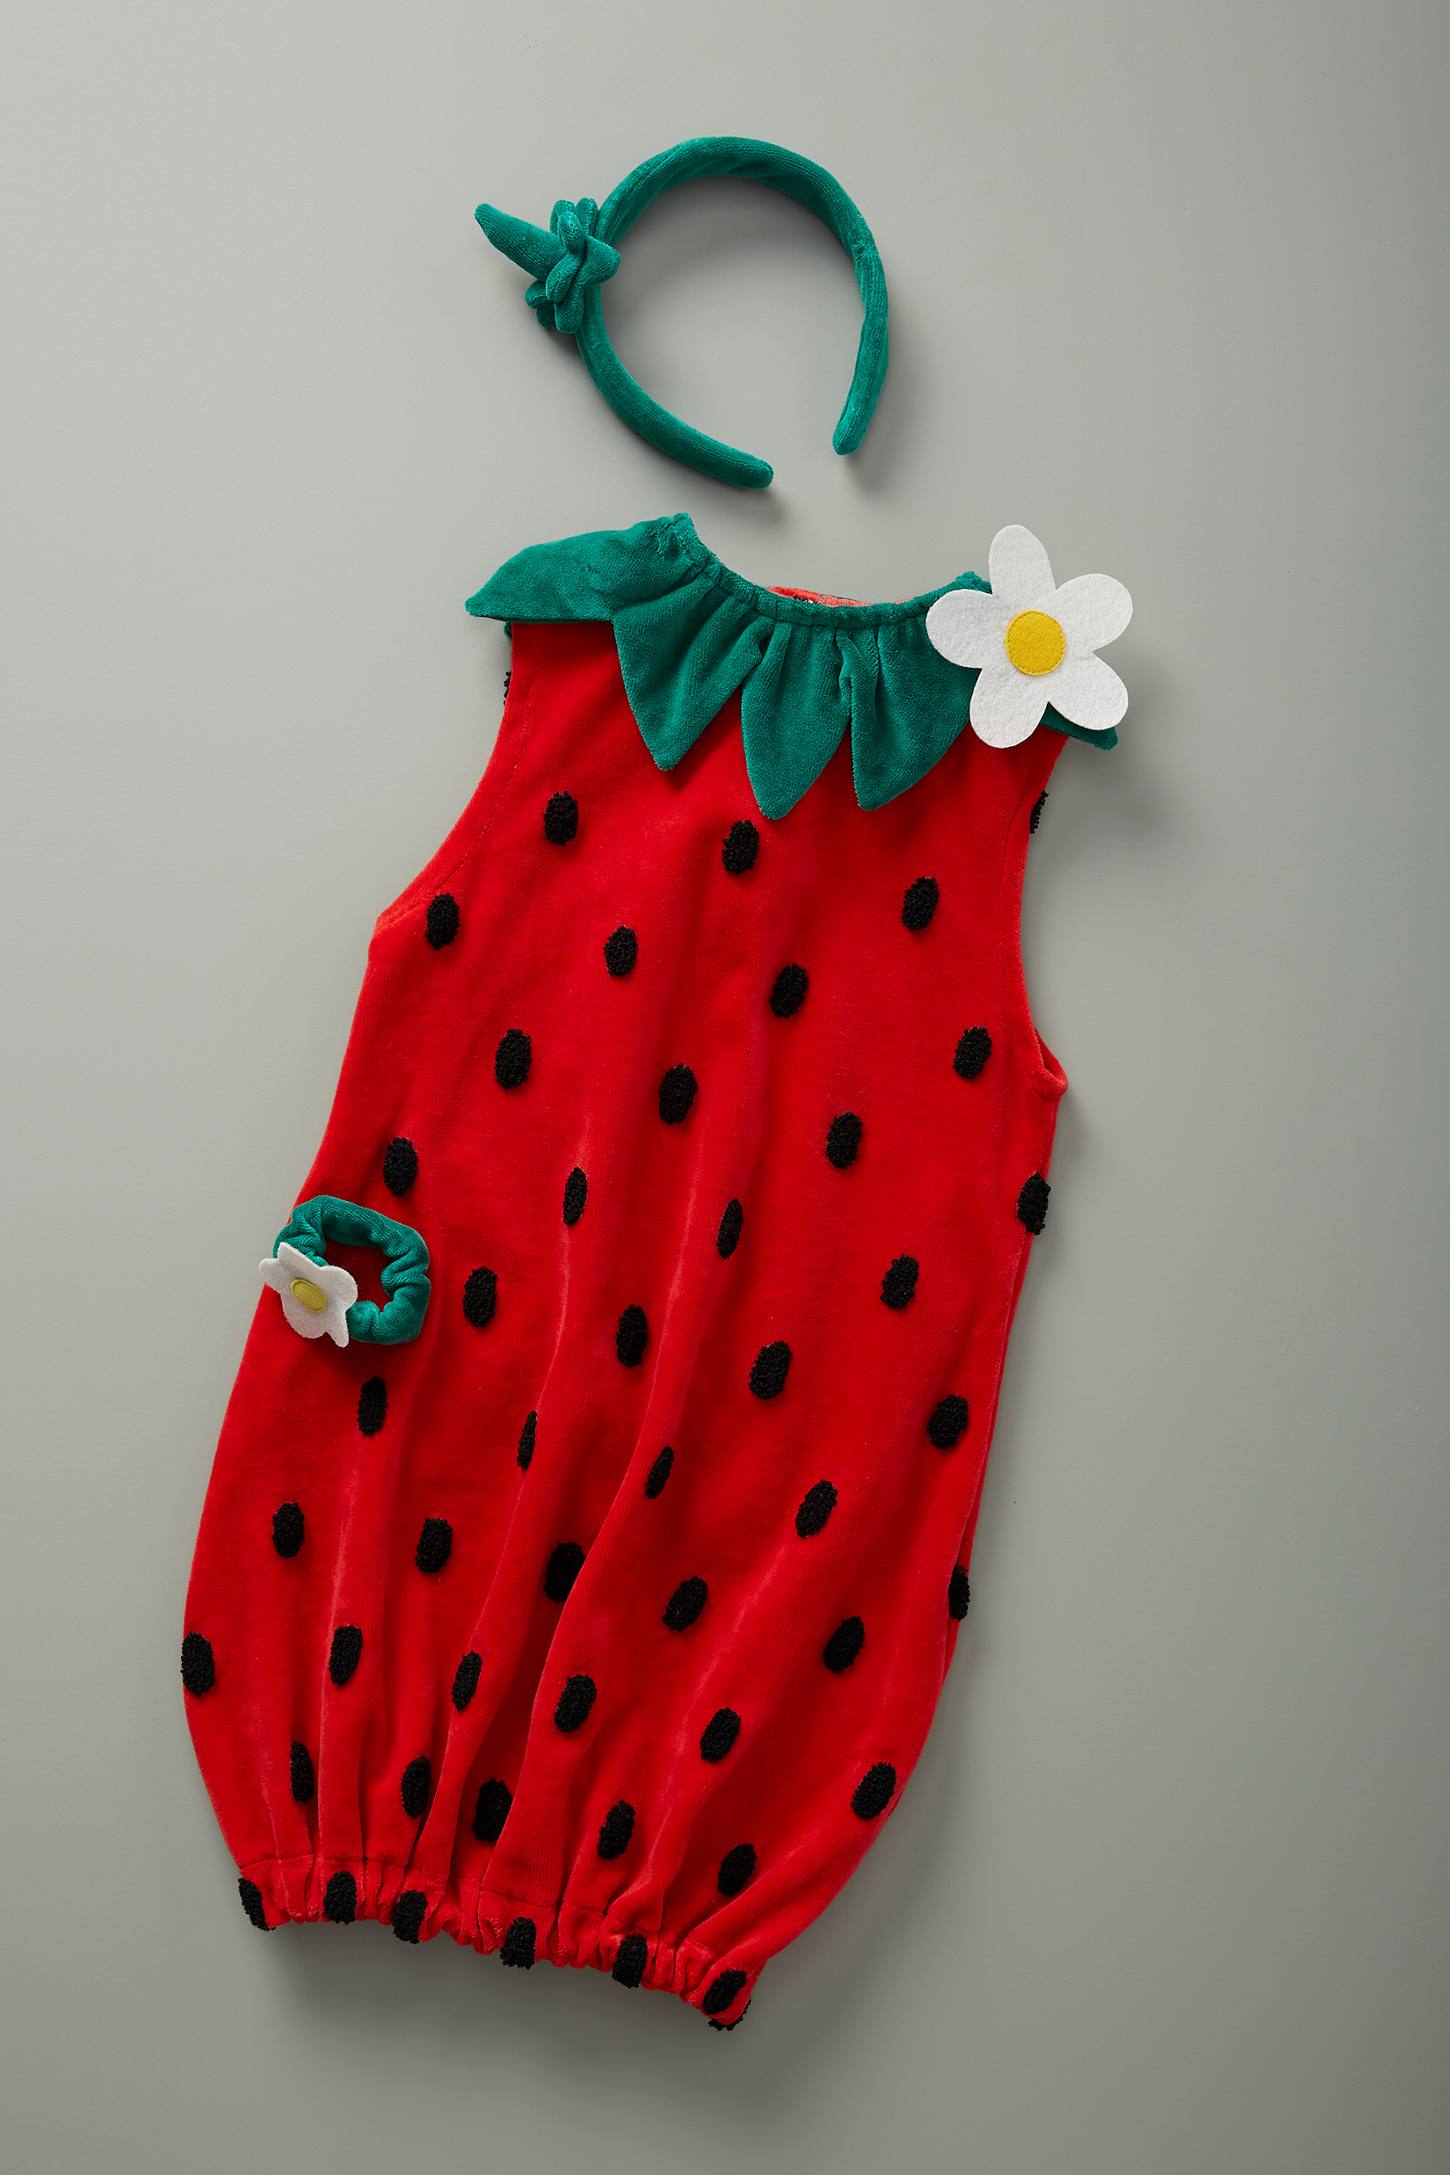 Strawberry Kids Costume